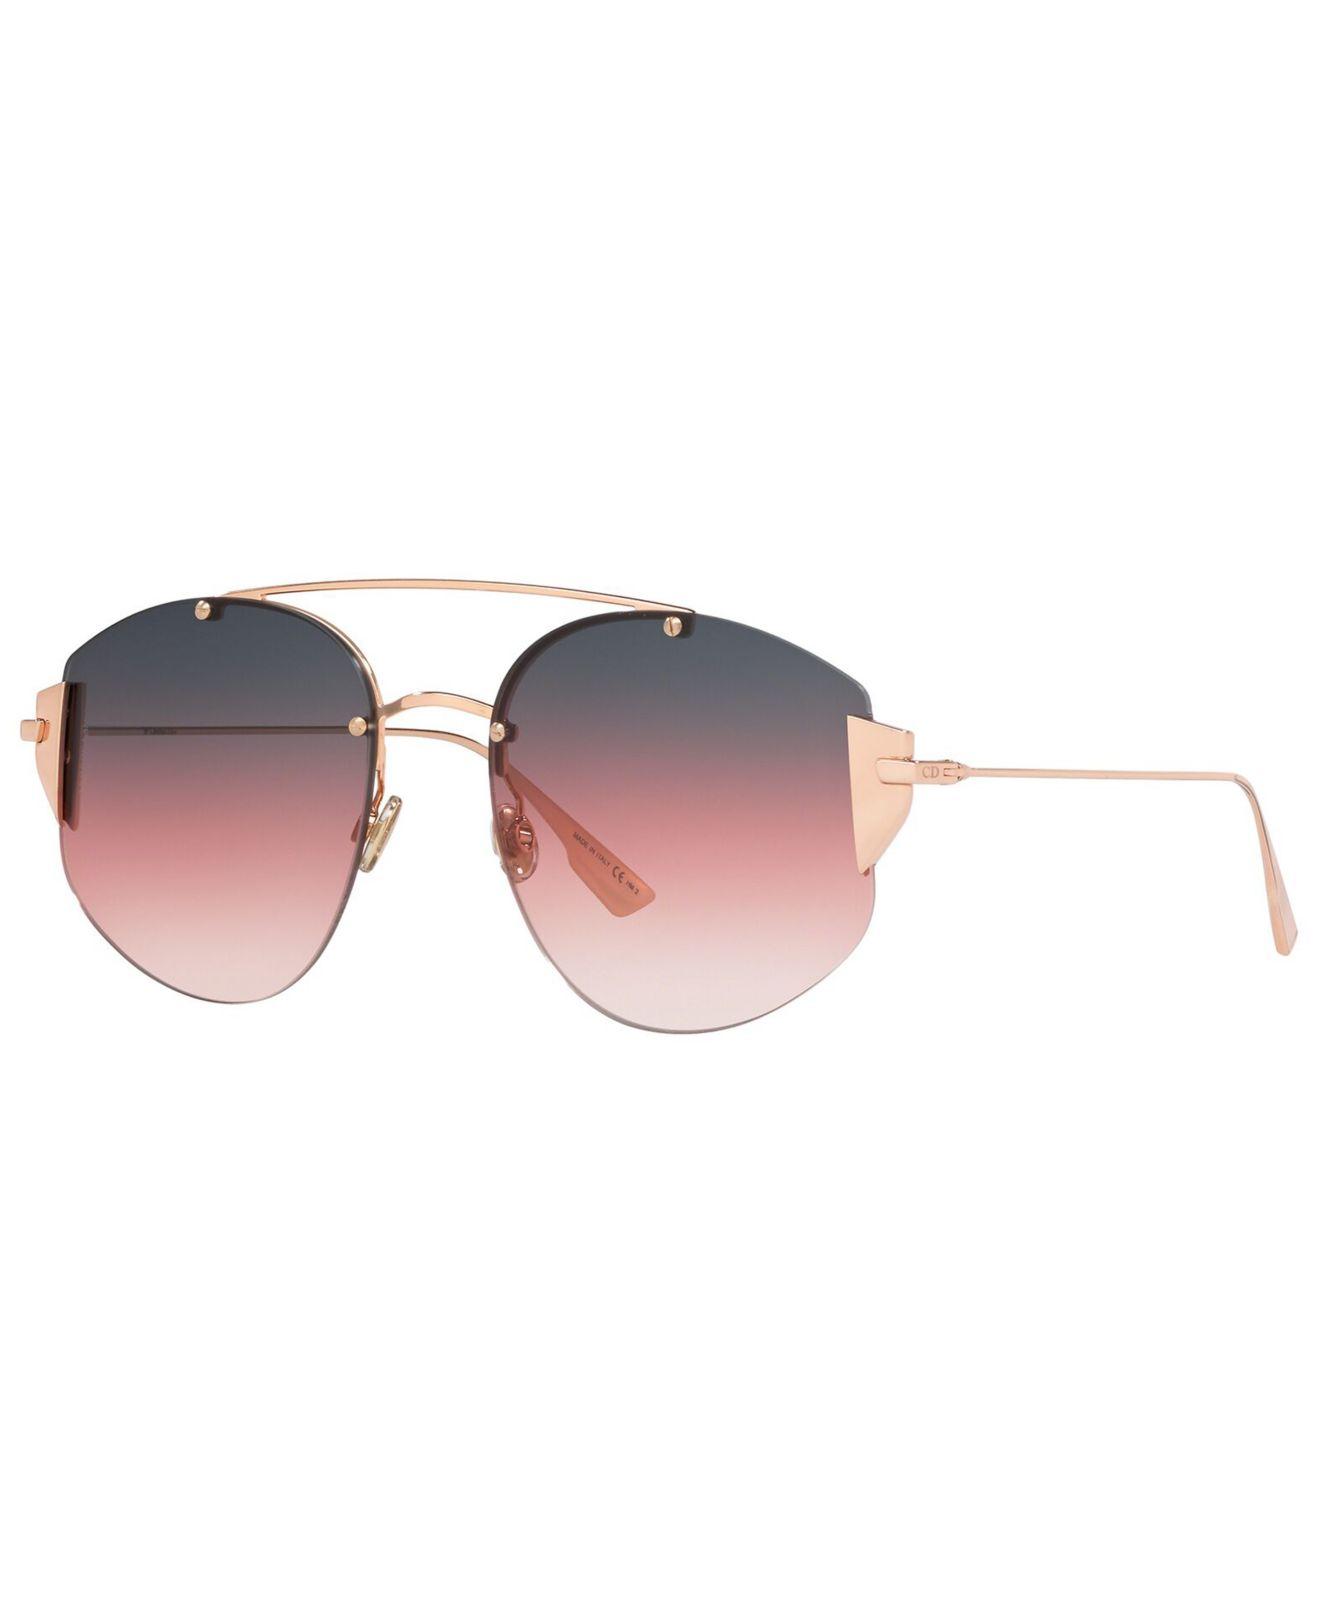 Dior Stronger Aviator Sunglasses in Gold Copper (Metallic) - Save 2% - Lyst